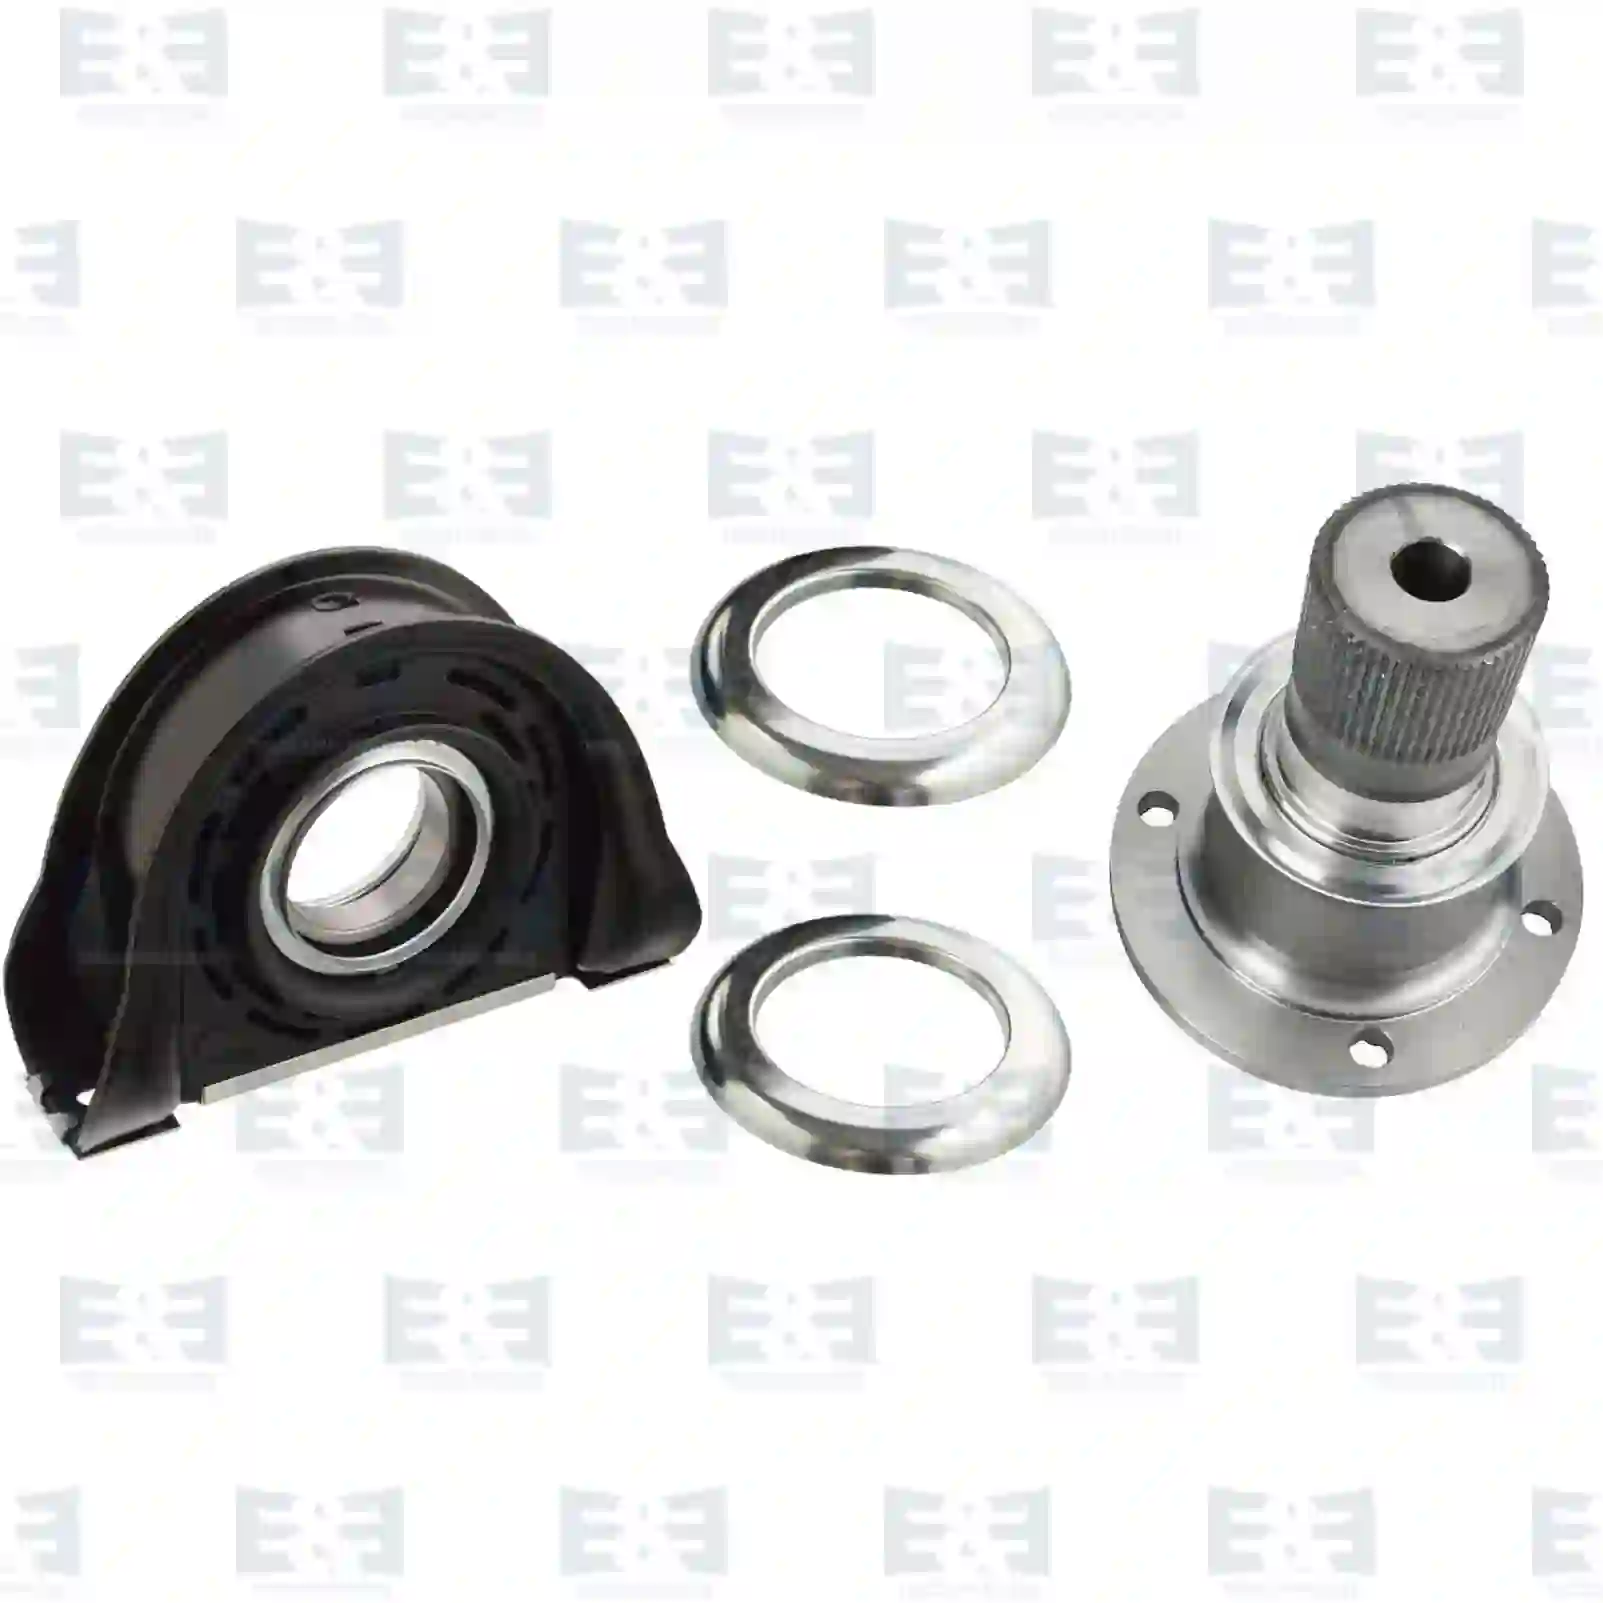  Center bearing kit || E&E Truck Spare Parts | Truck Spare Parts, Auotomotive Spare Parts